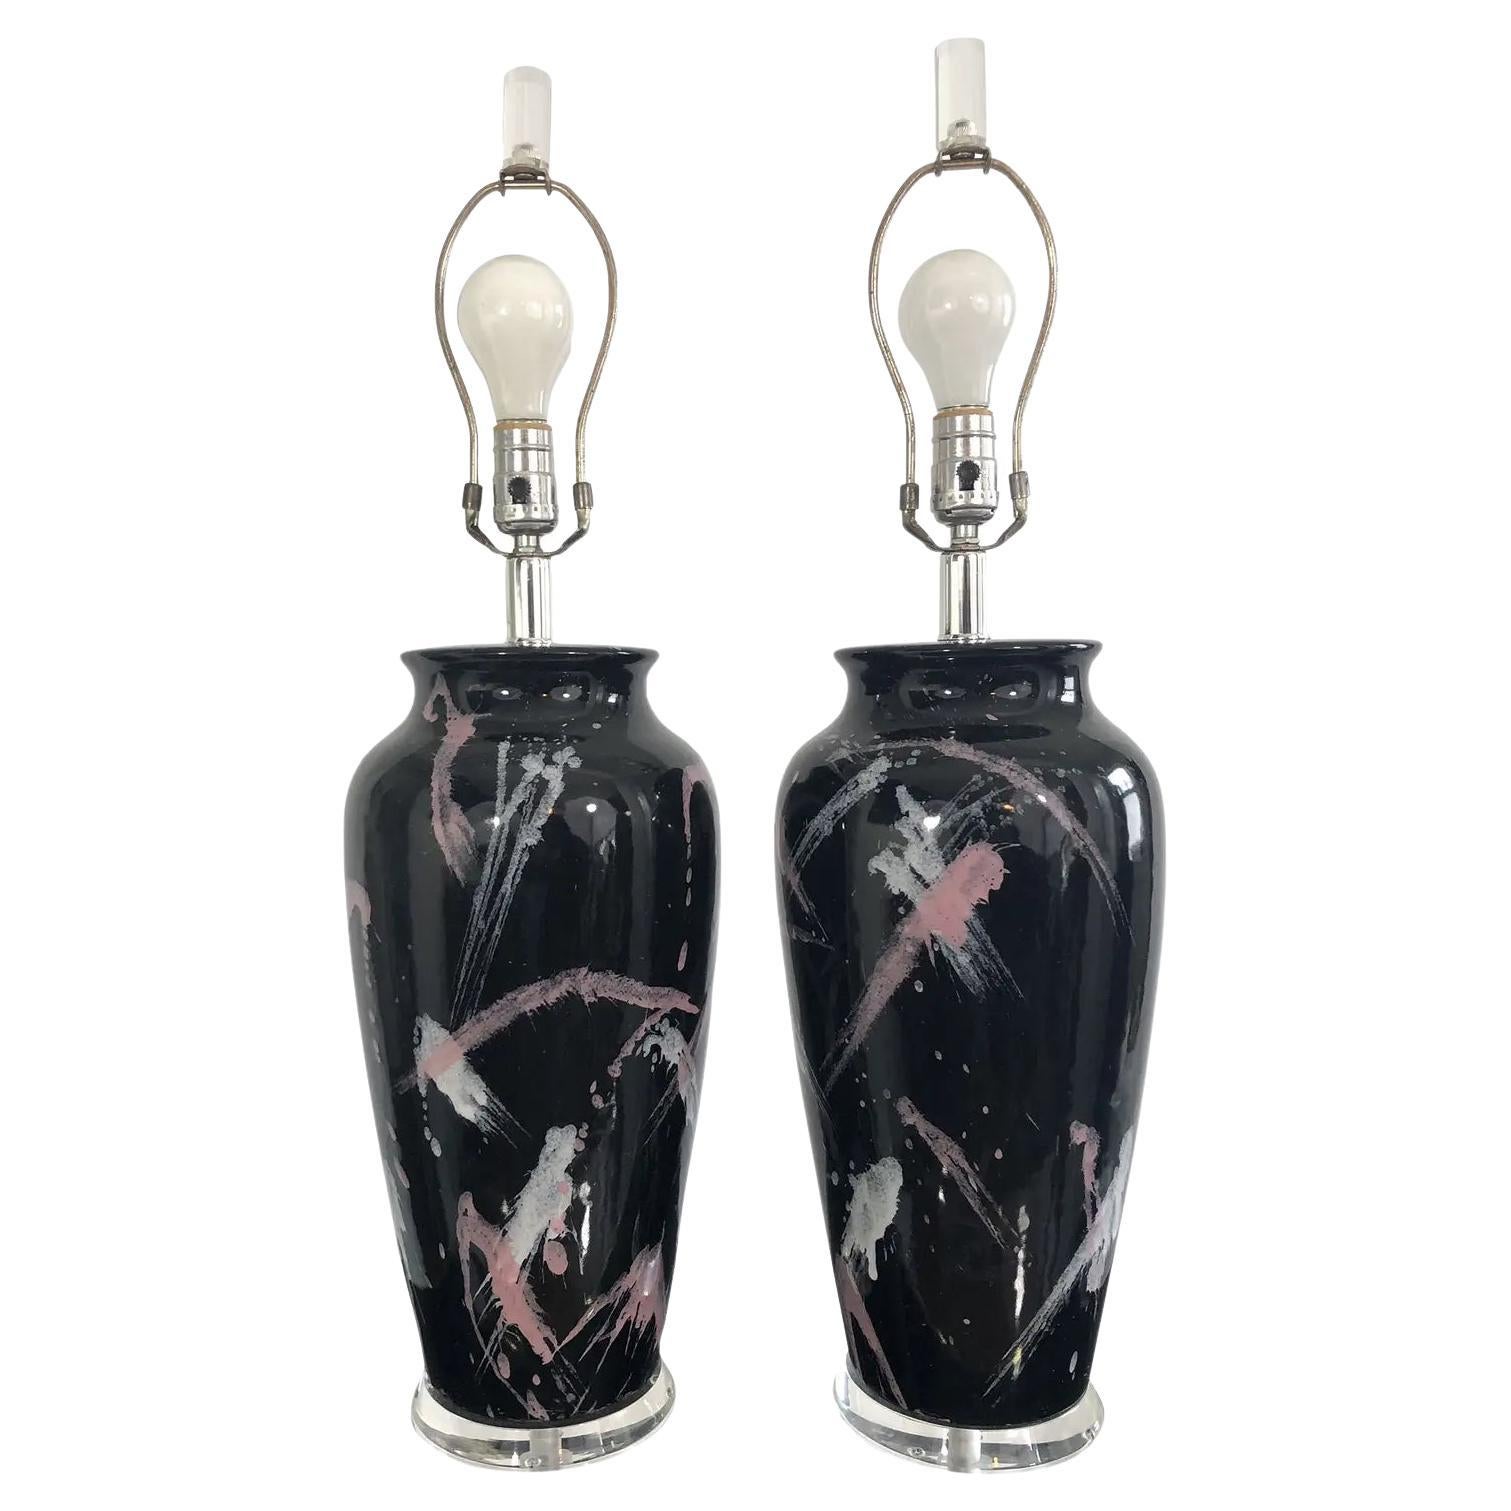 Vintage Postmodern Jackson Pollock Style Splatter Glaze Lamps - a Pair For Sale